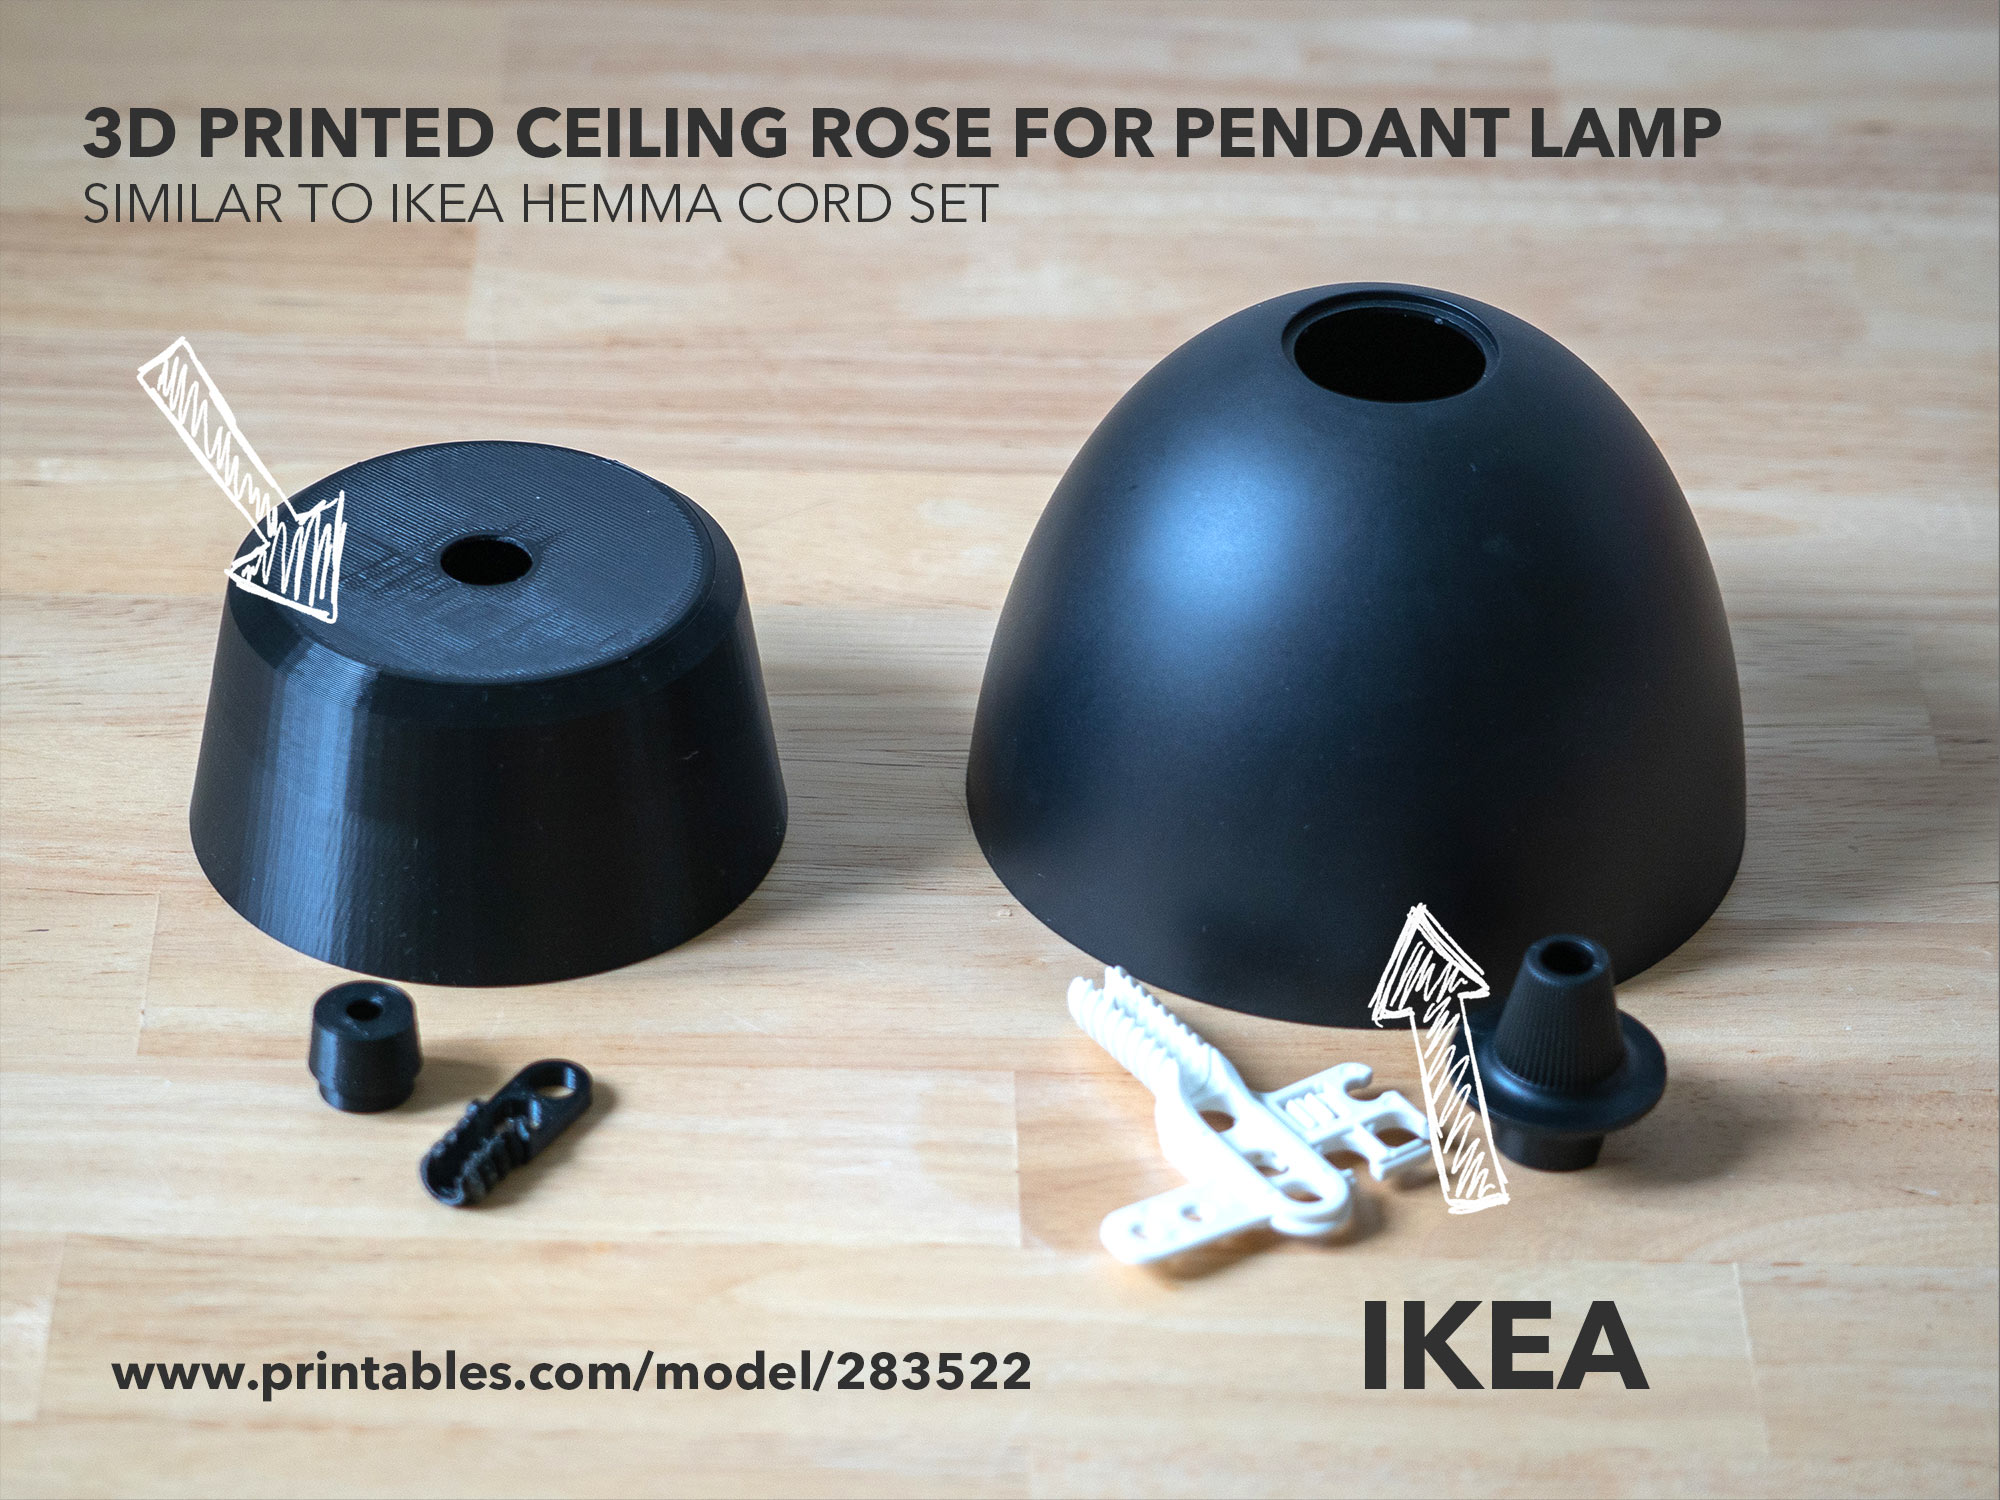 Ceiling Rose for Pendant Lamps similar to Ikea Hemma cord set